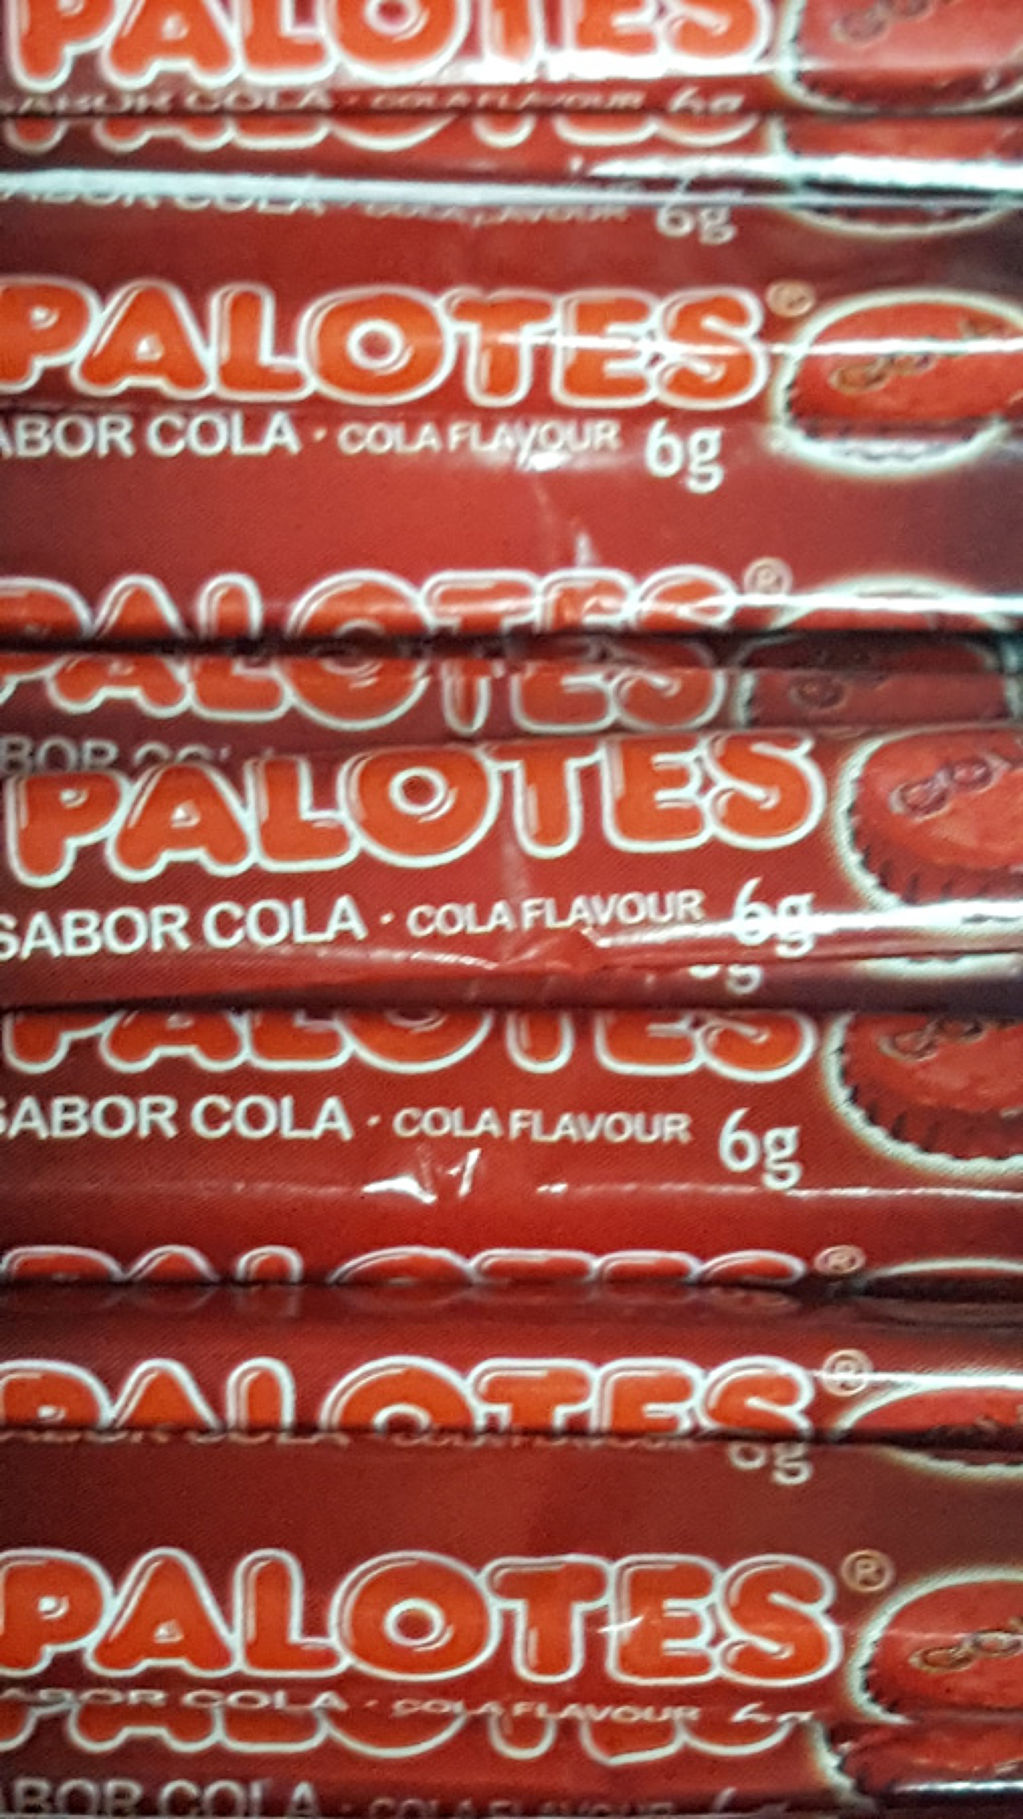 Palote cola - 0234f-20200509_082455.jpg